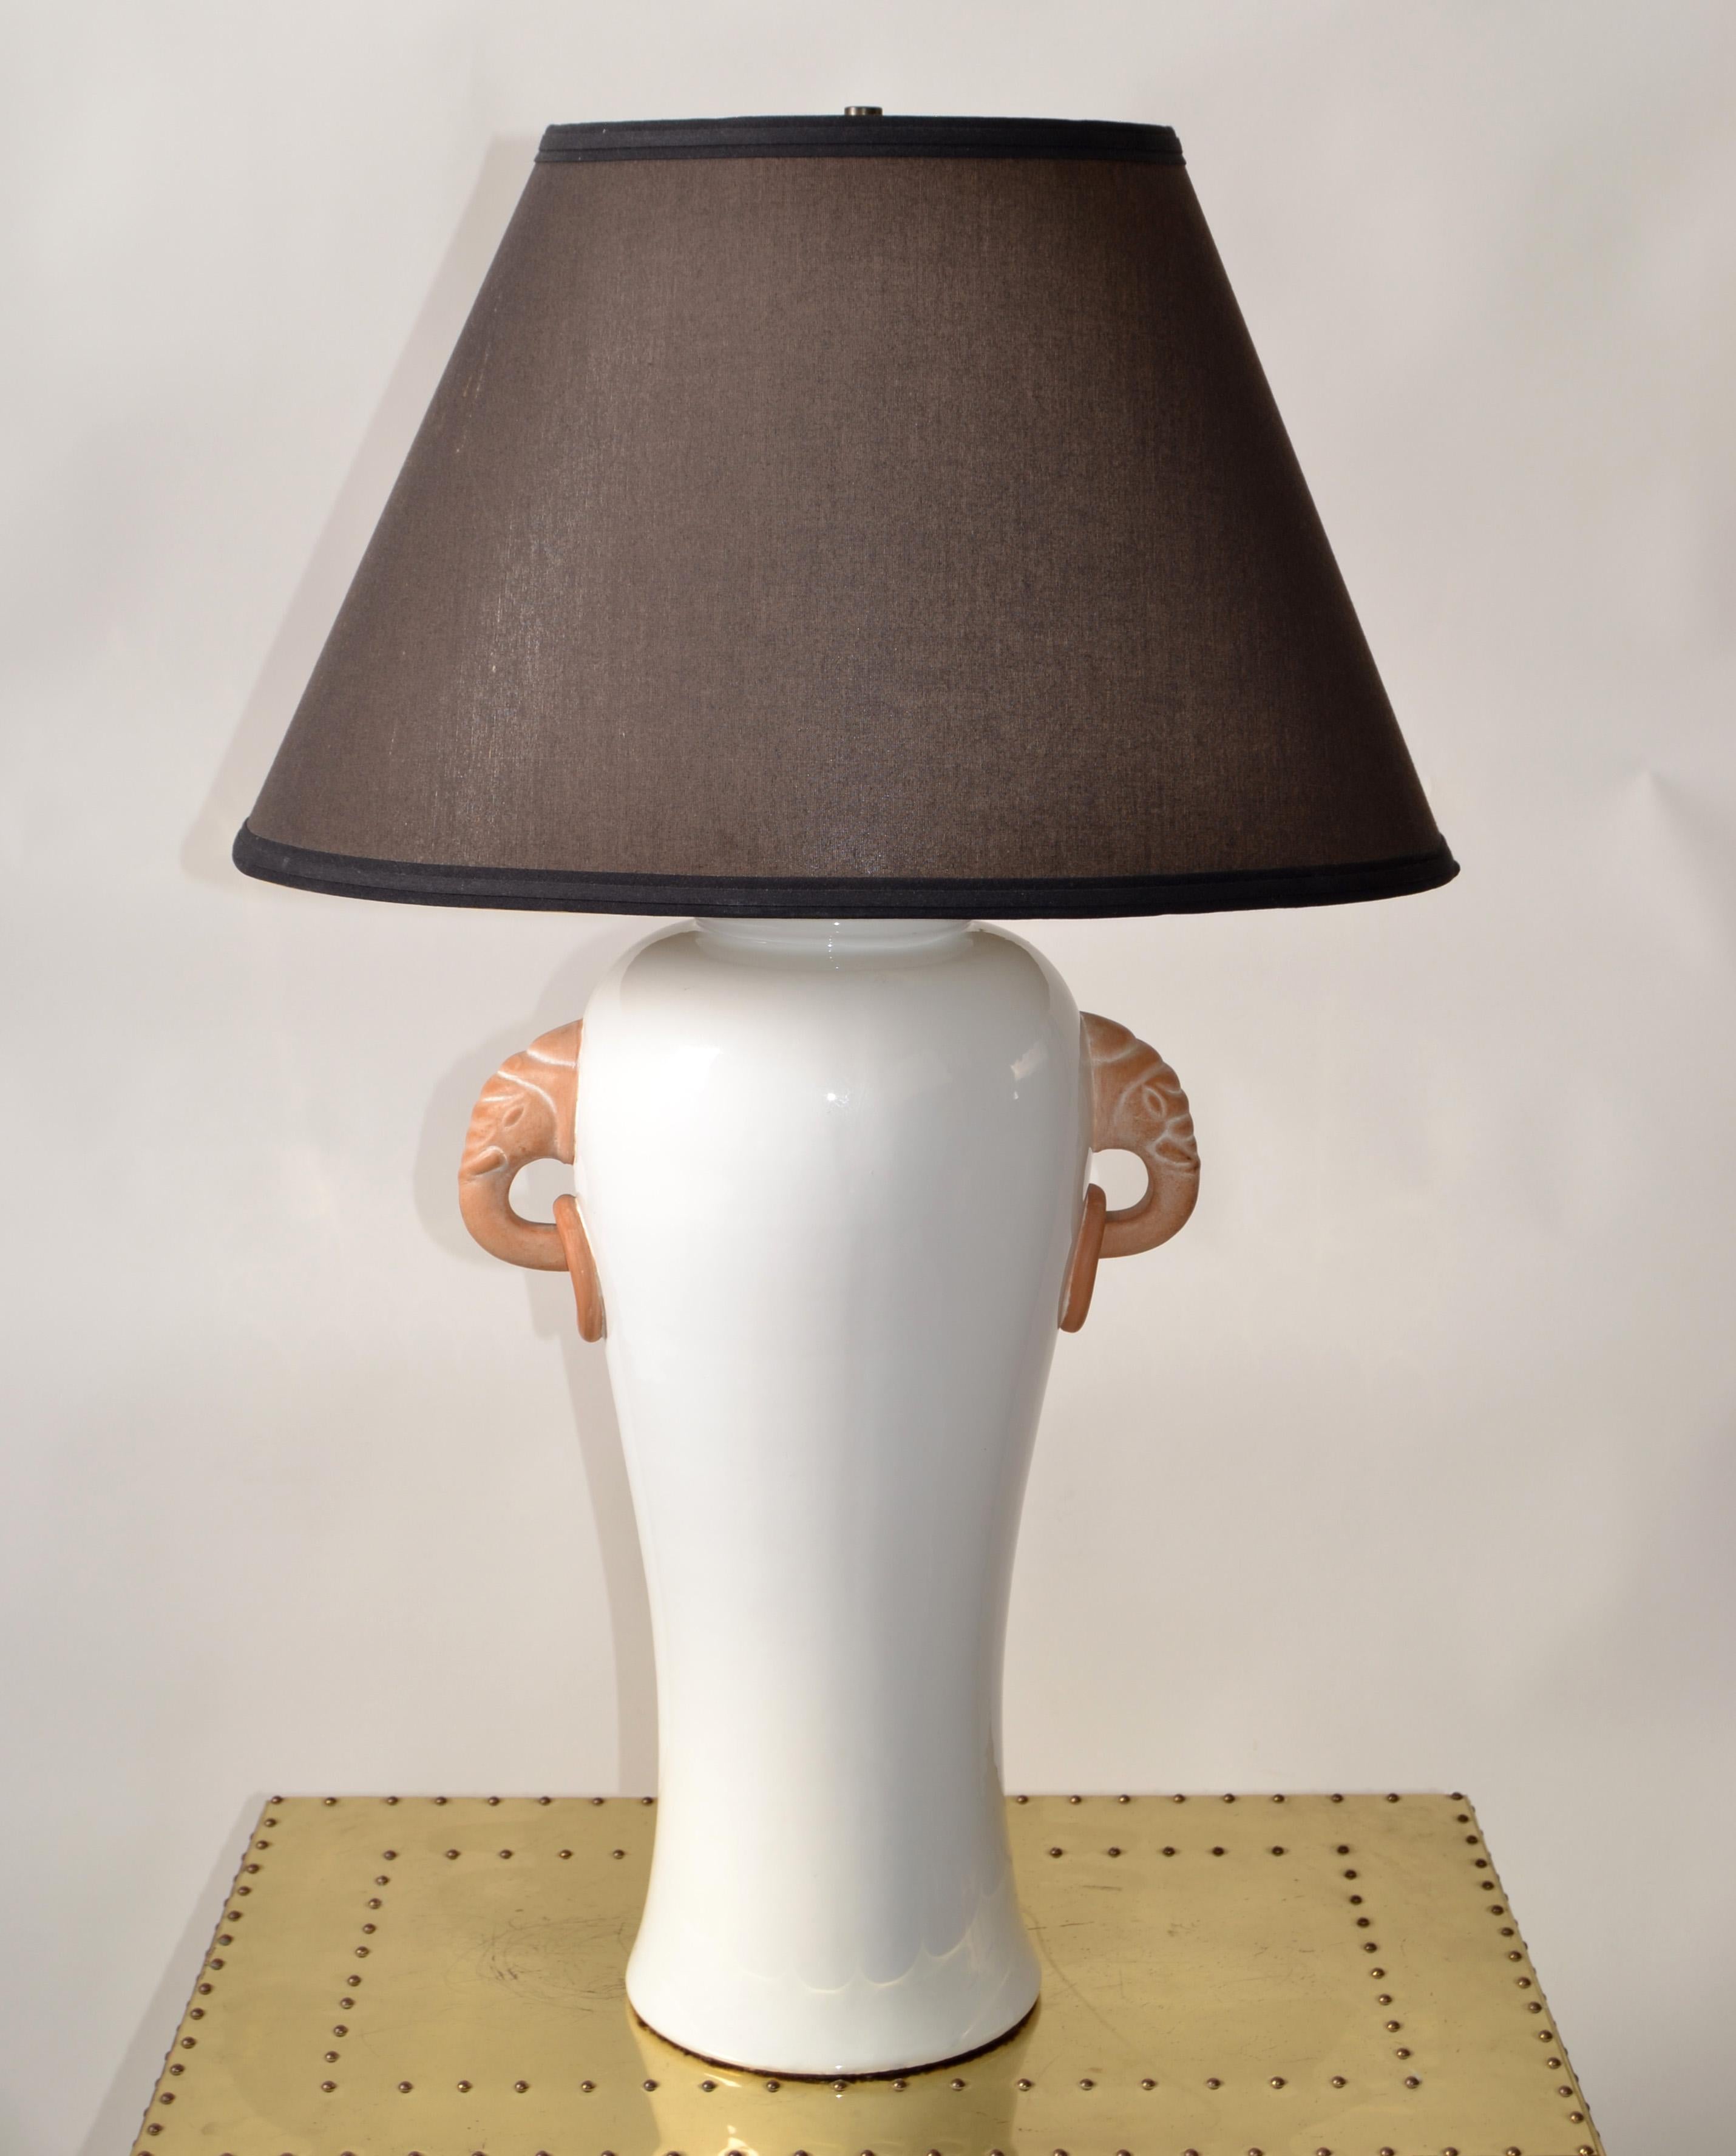 Oriental Terracotta Ginger Jar Elephant Handles Table Lamp Hollywood Regency For Sale 8